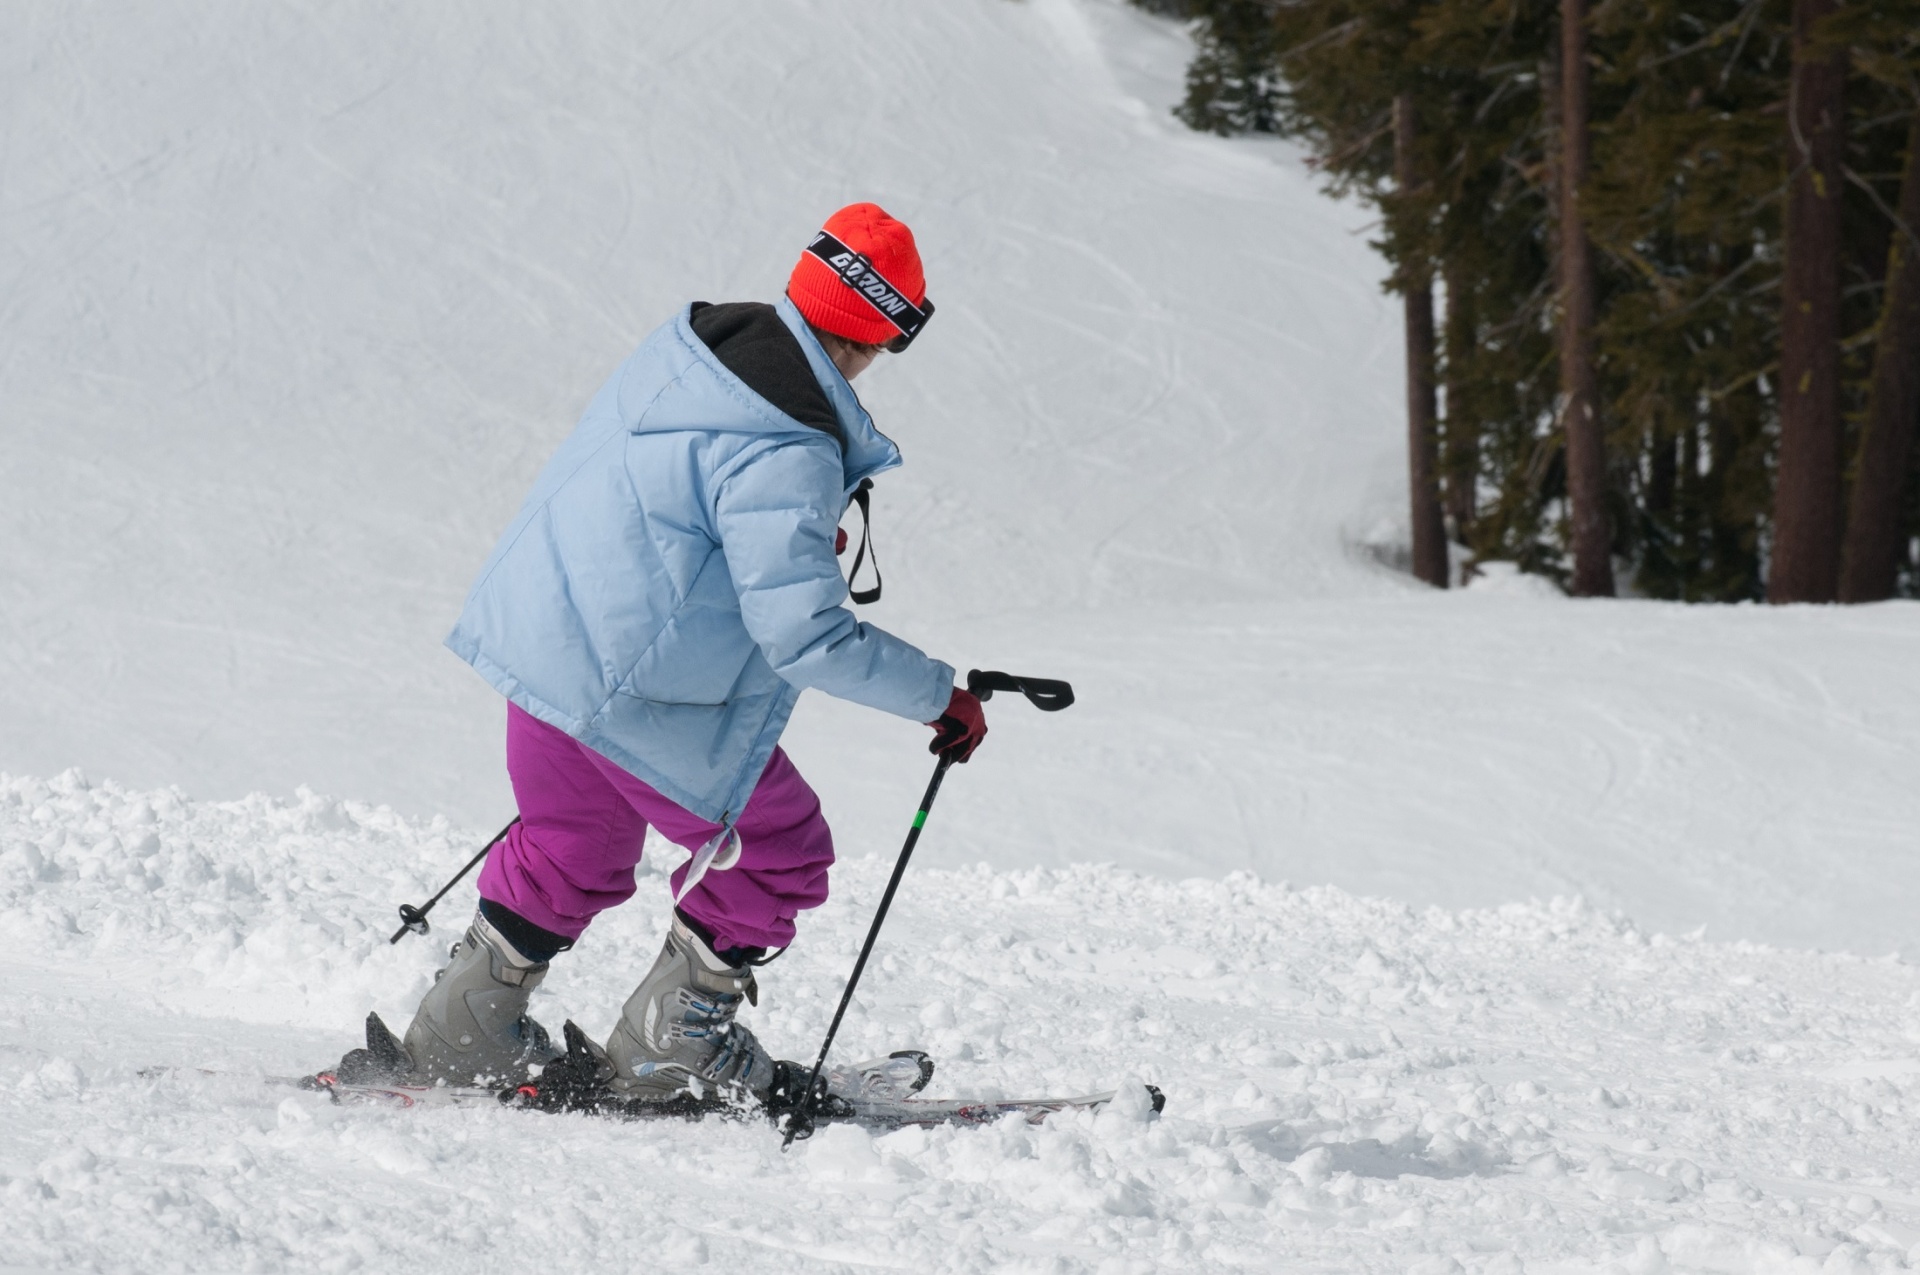 skier skiing downhill free photo